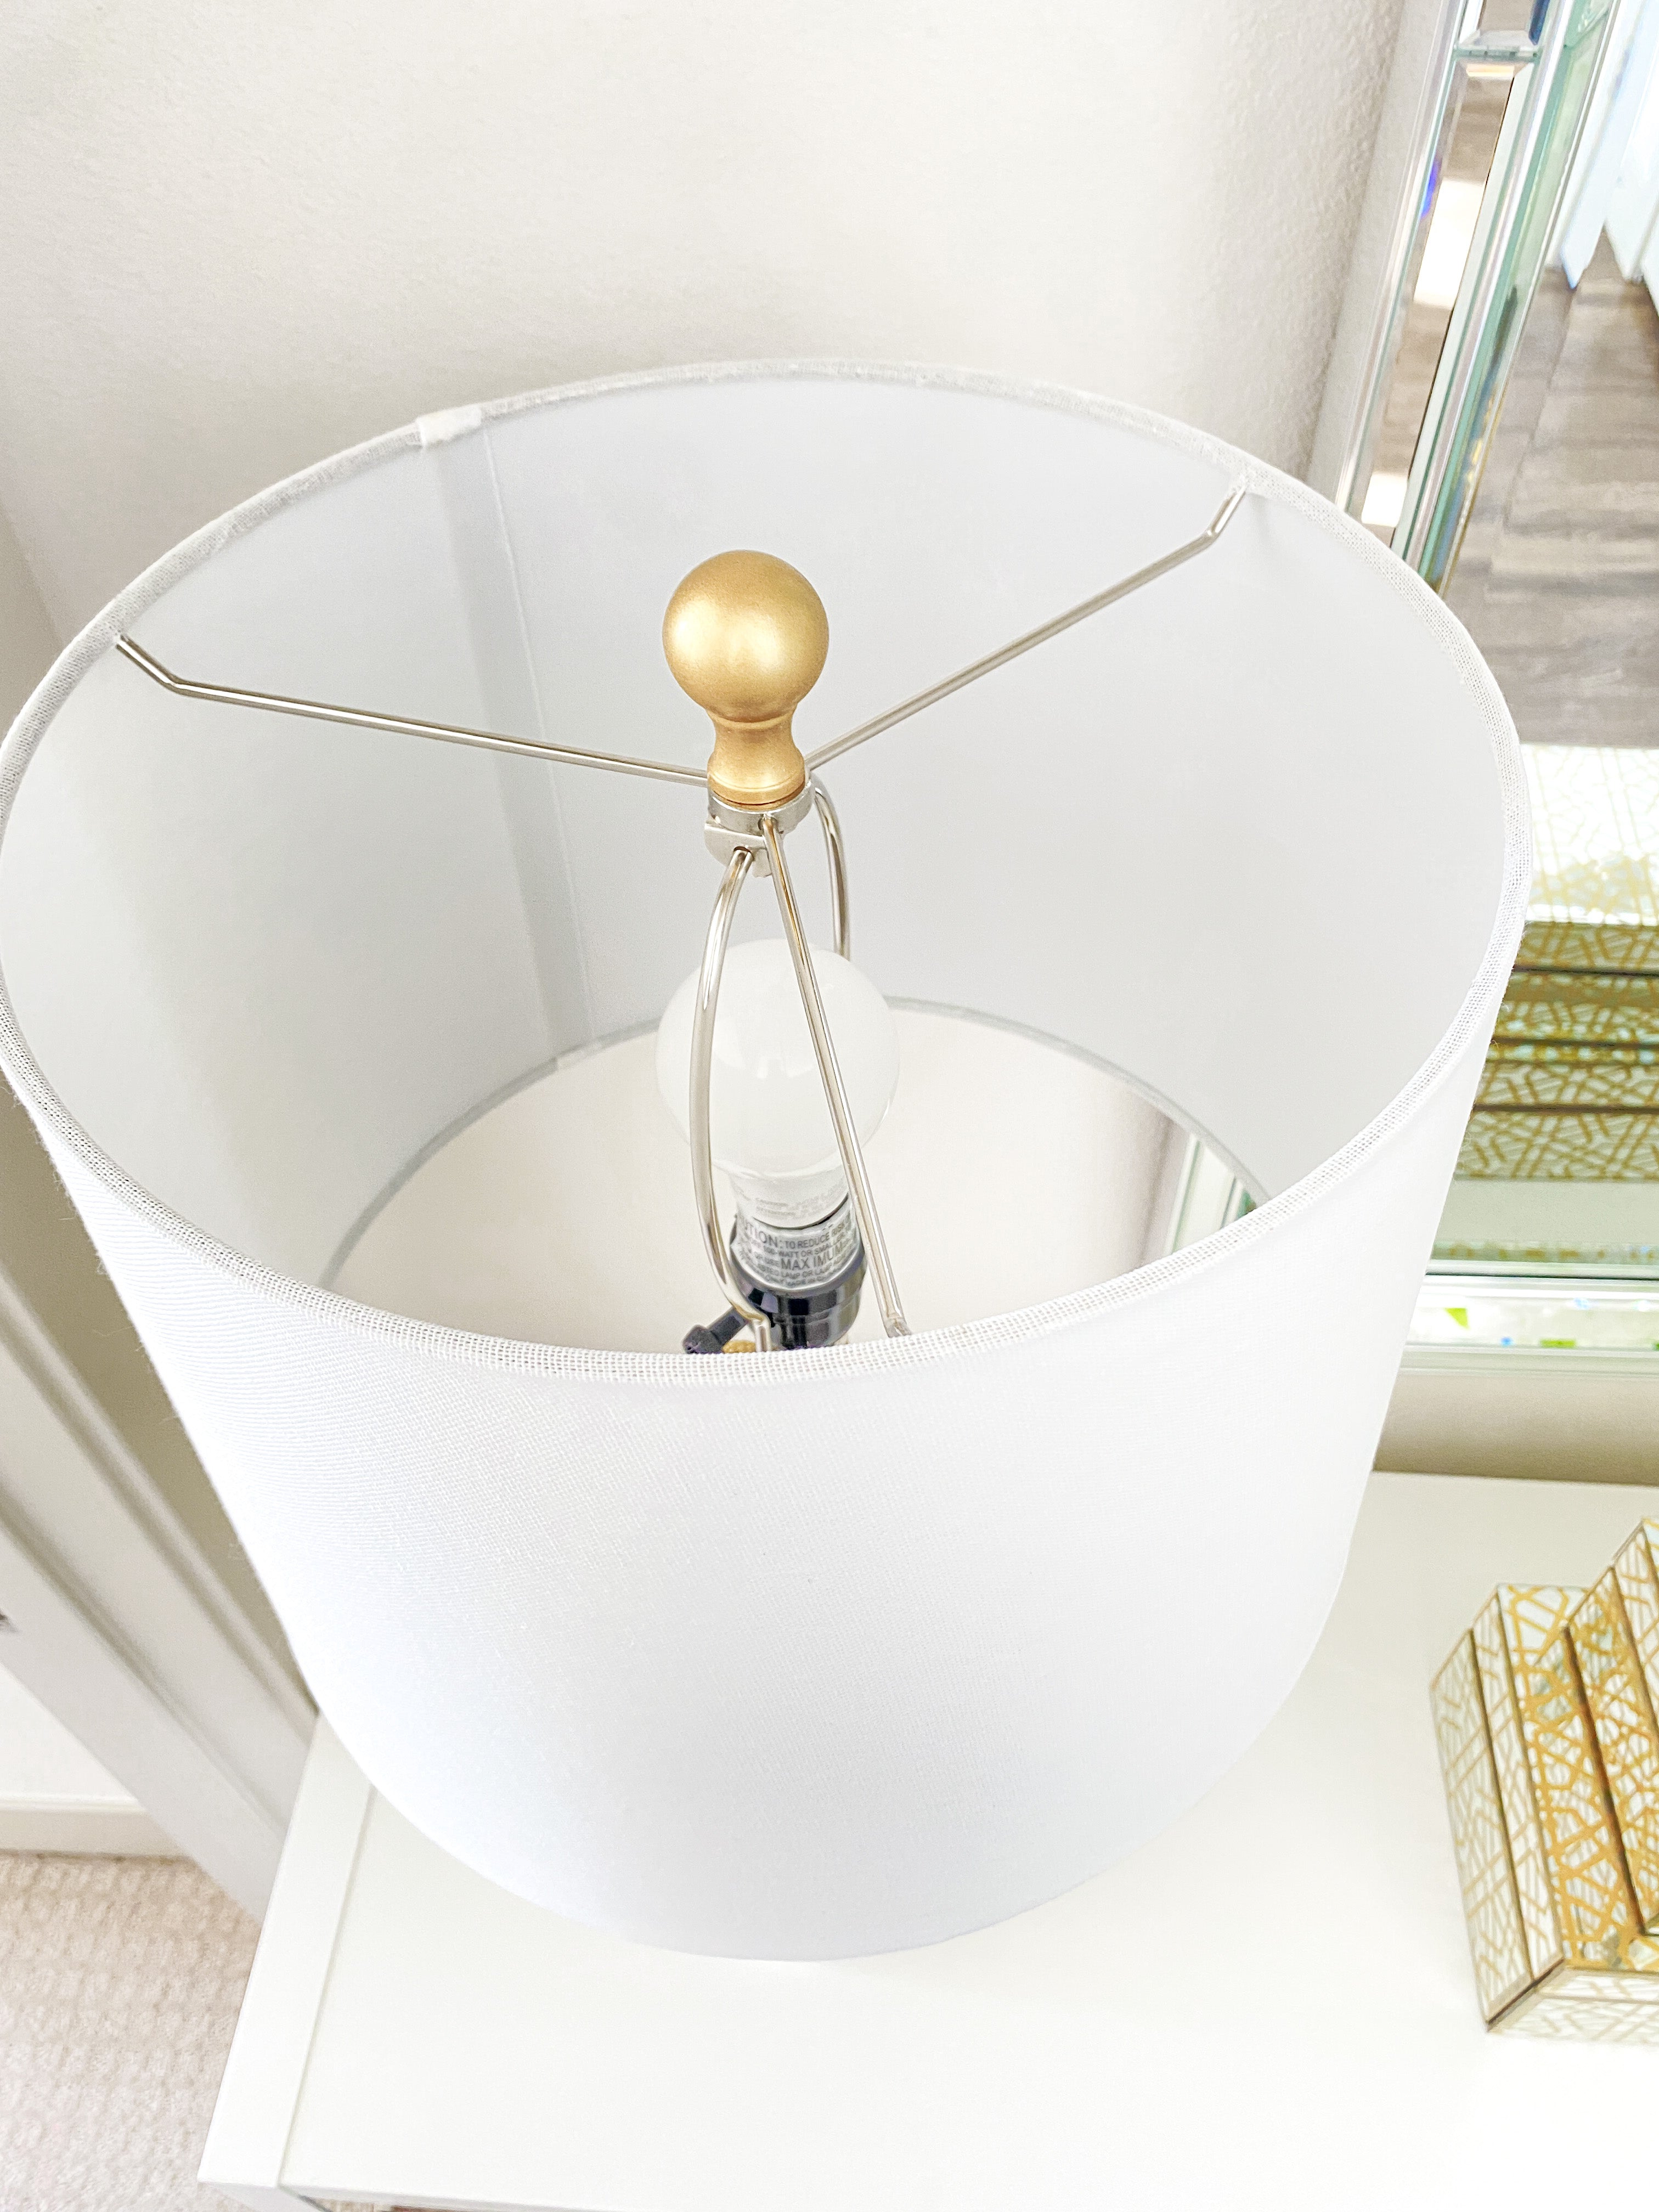 Gold Cheetah Sculpture Table Lamp - HTS HOME DECOR